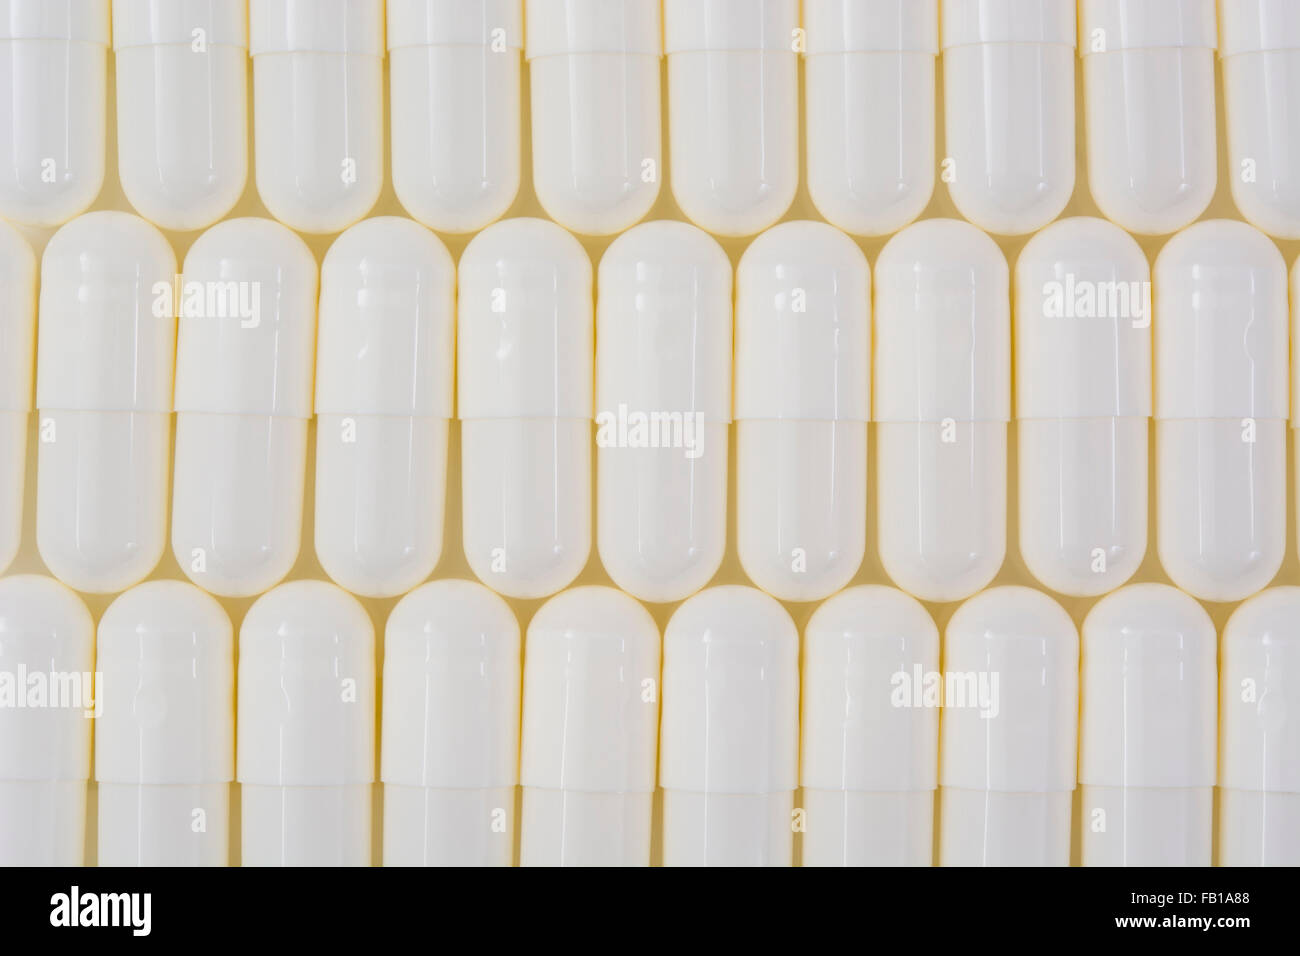 Close-up of white pills - capsule form made of gelatin. White pills. Big Pharma metaphor, drug trials concept. Stock Photo